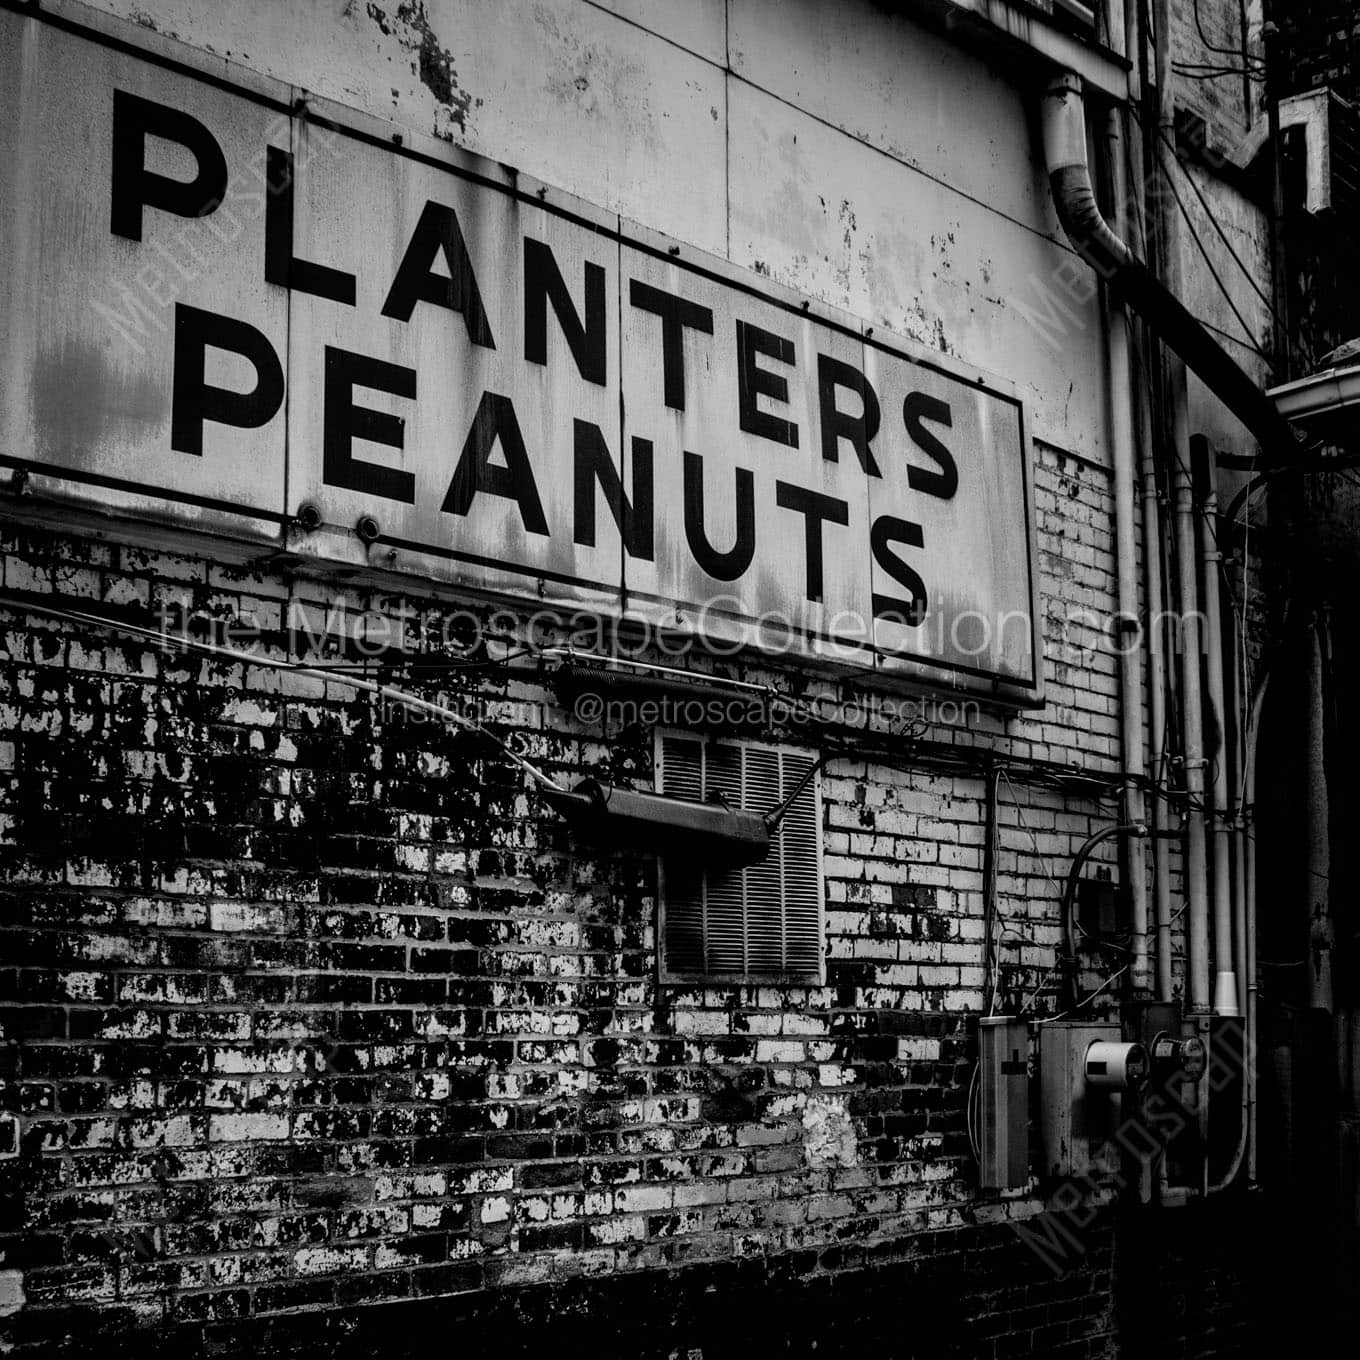 planters peanuts shop Black & White Office Art